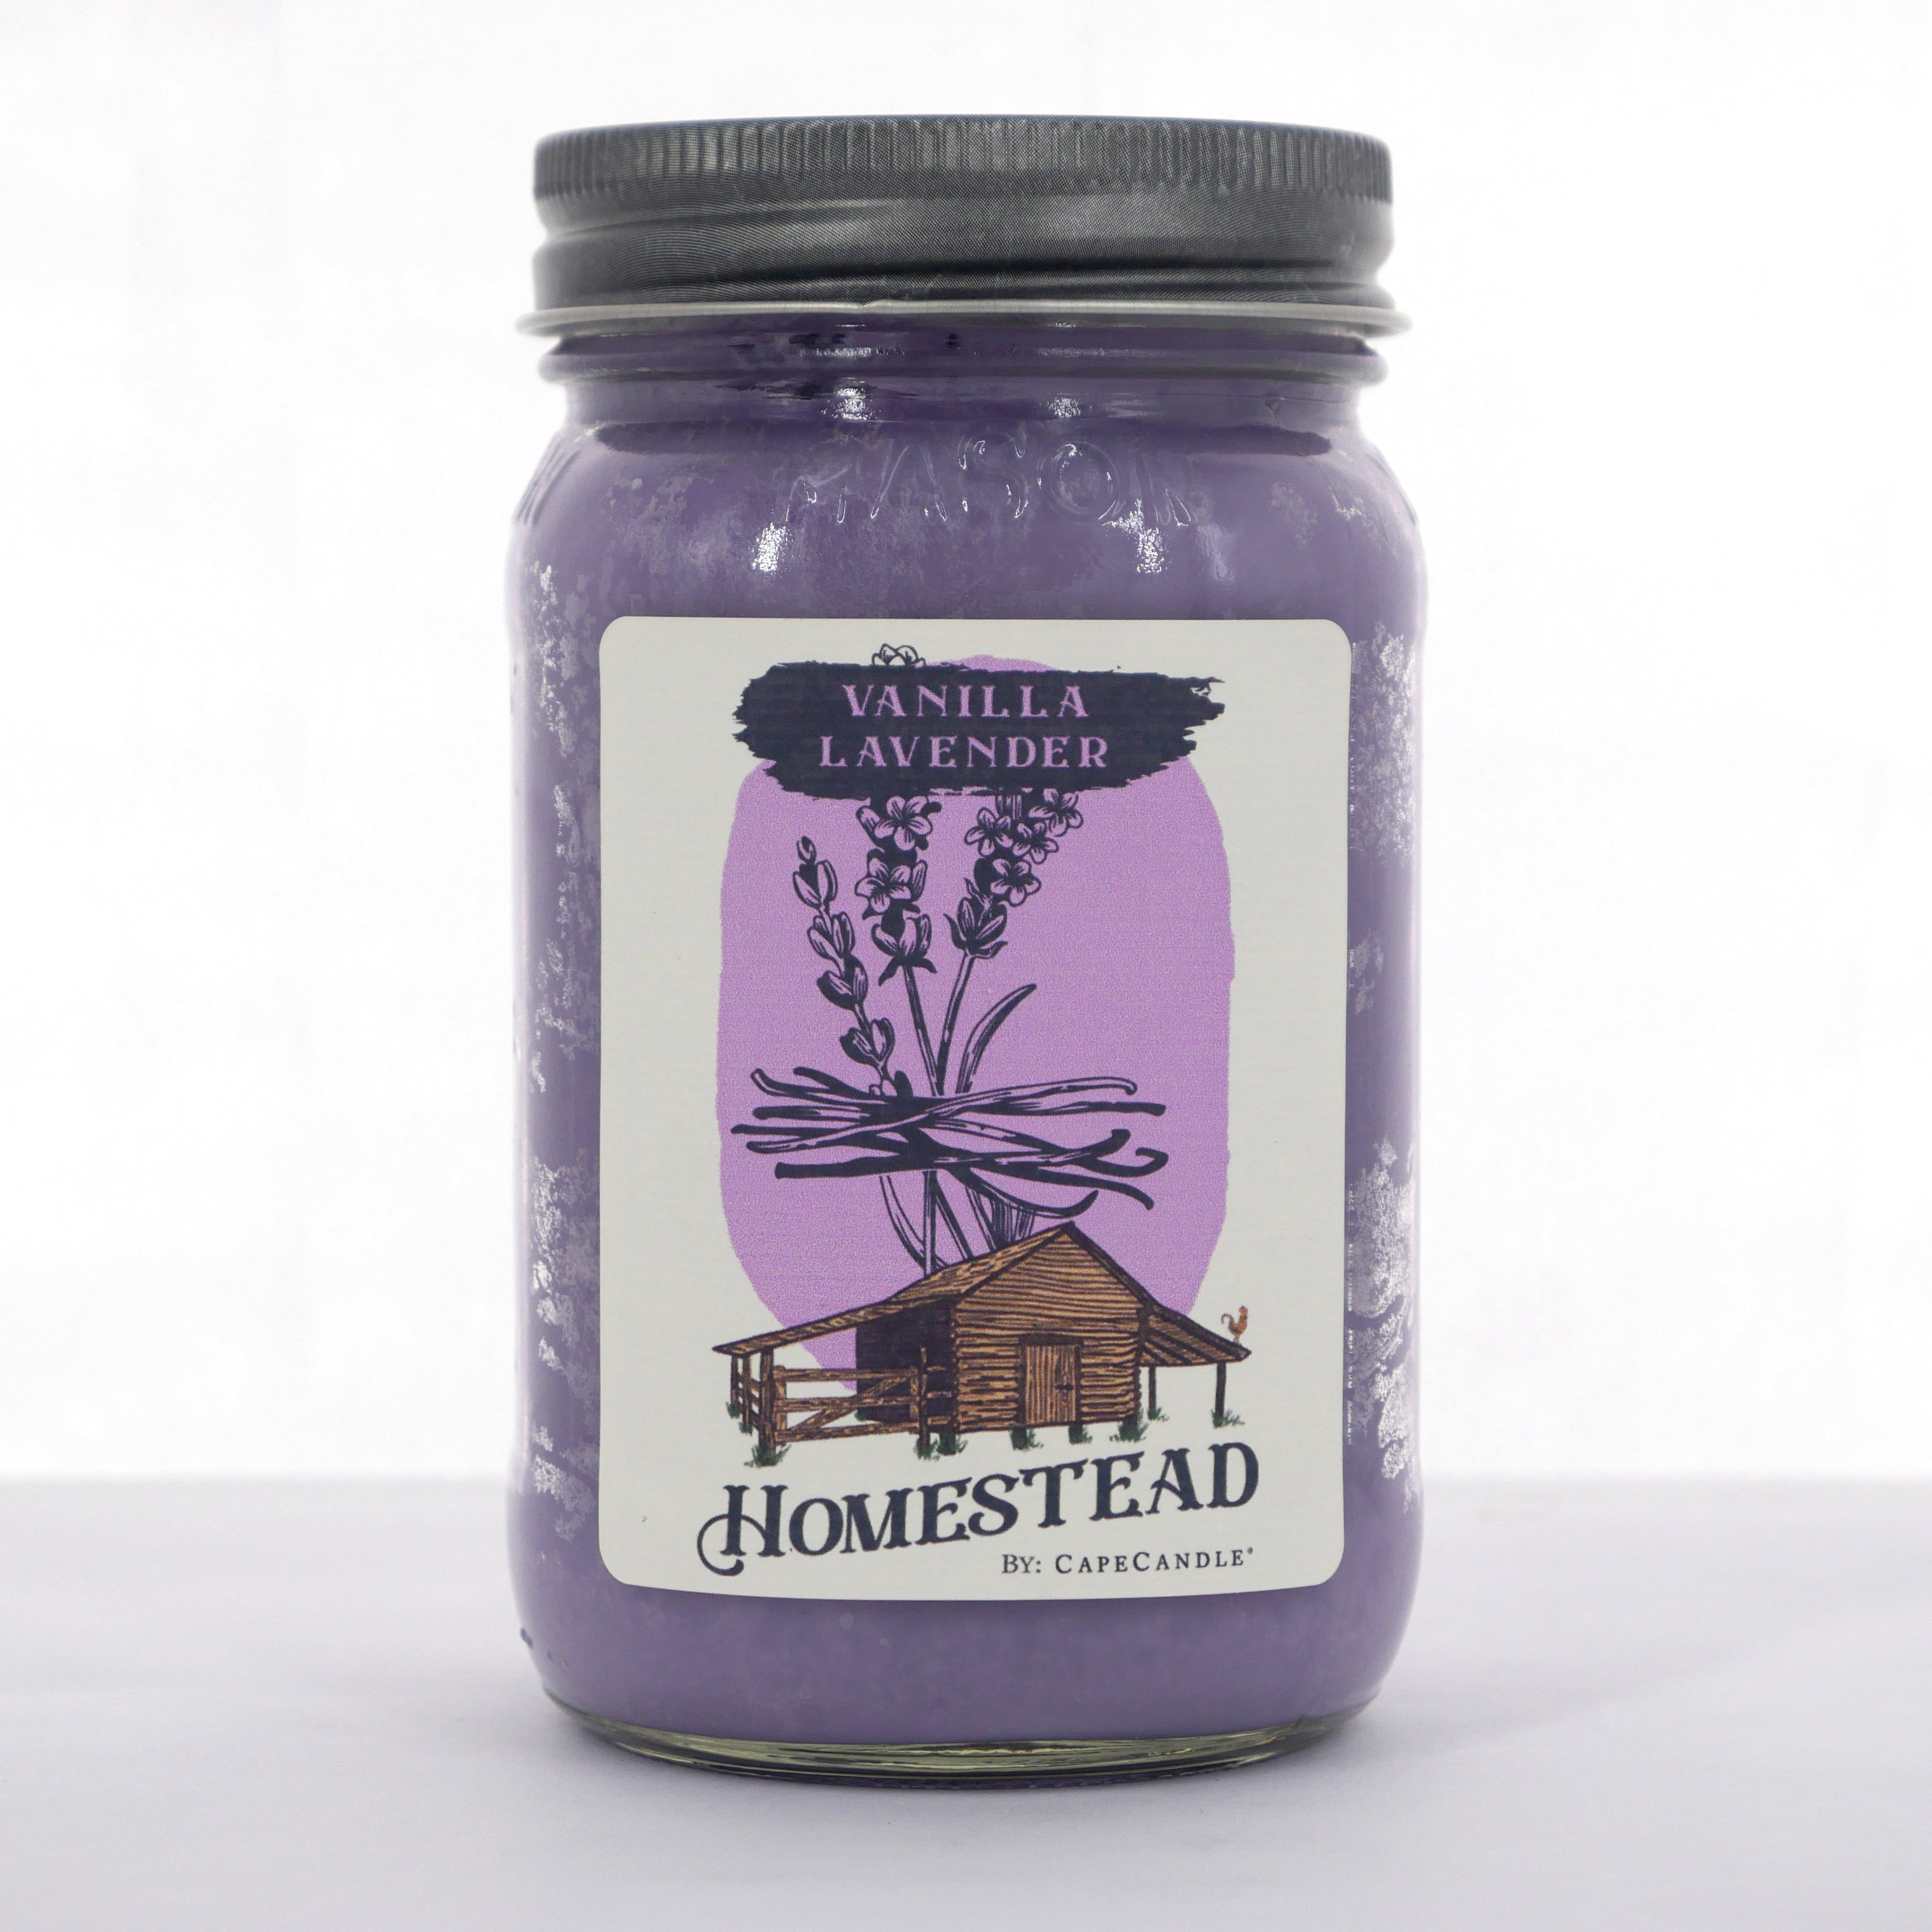 Vanilla Lavender Soy Candle 16oz Homestead Mason Jar by Cape Candle